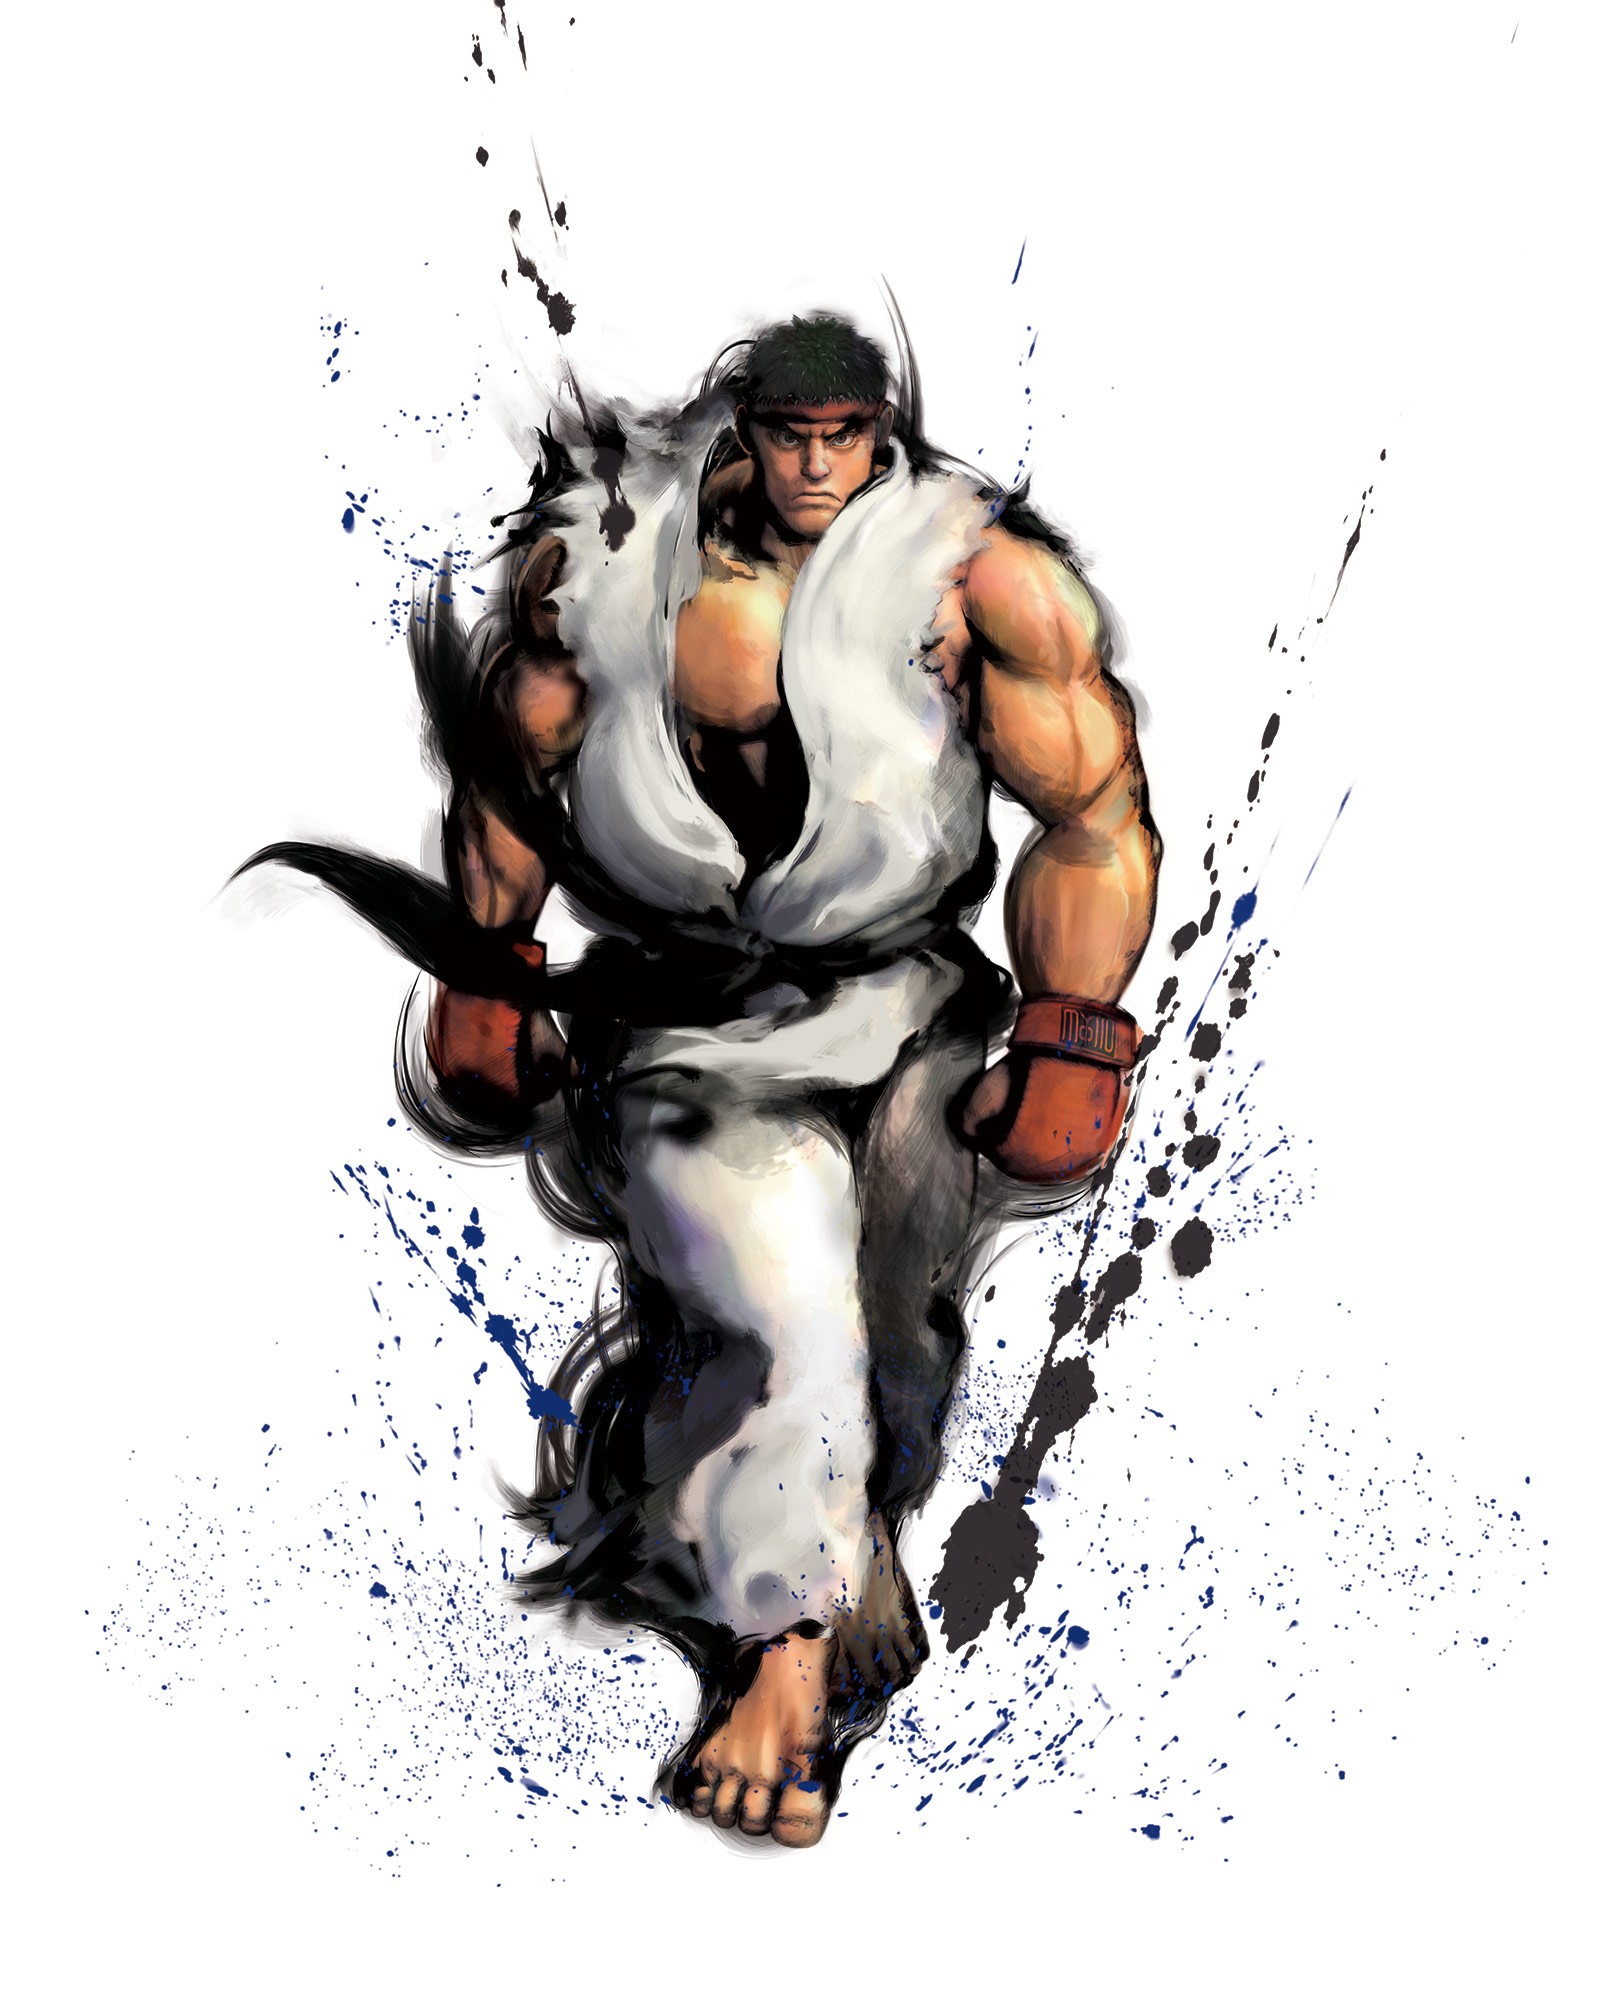 Illustration + digital enhancement Ryu Street Fighter IV